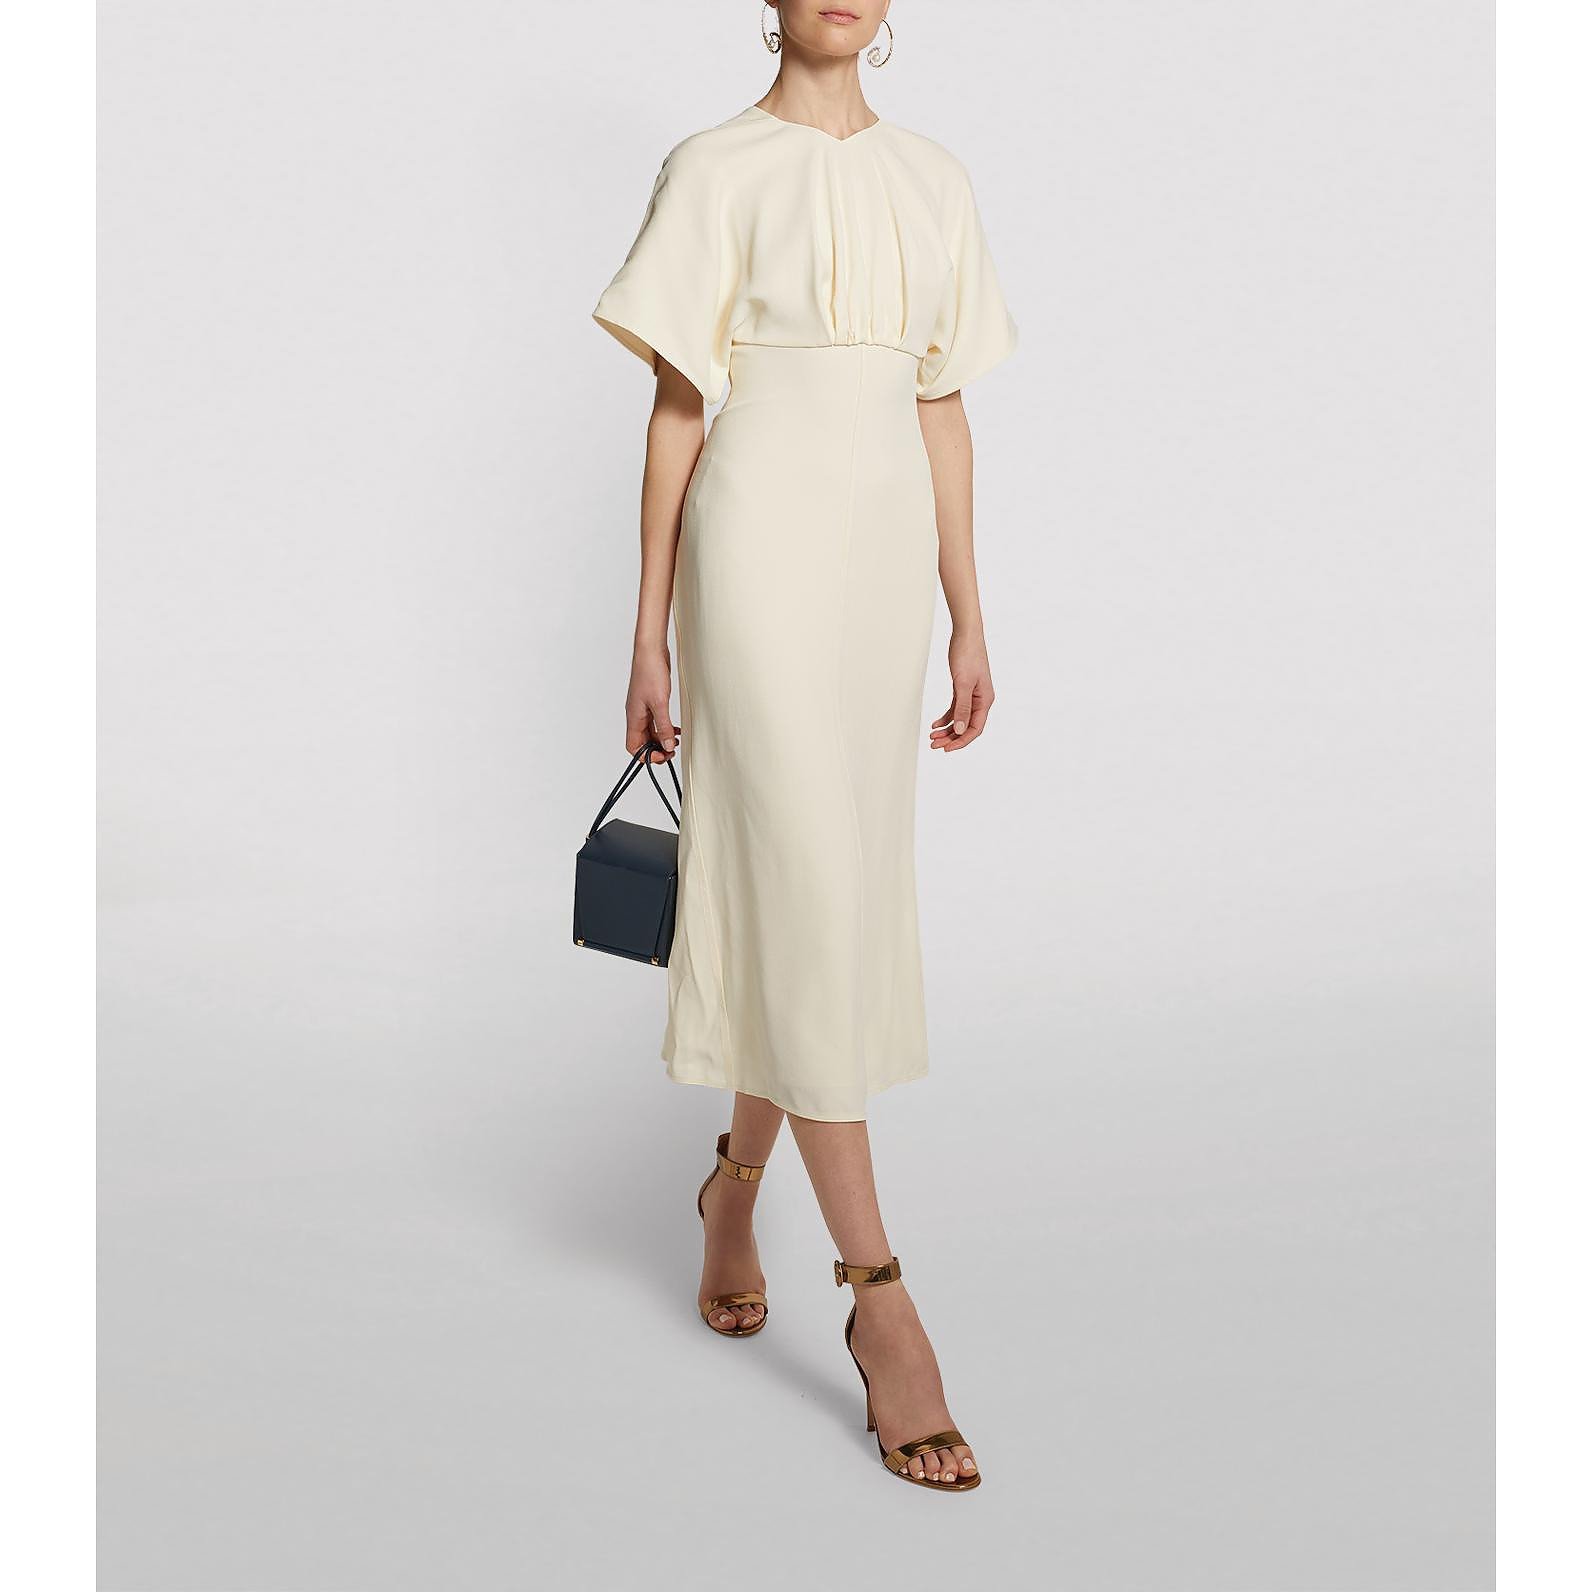 Victoria Beckham Cape-Sleeved Midi Dress